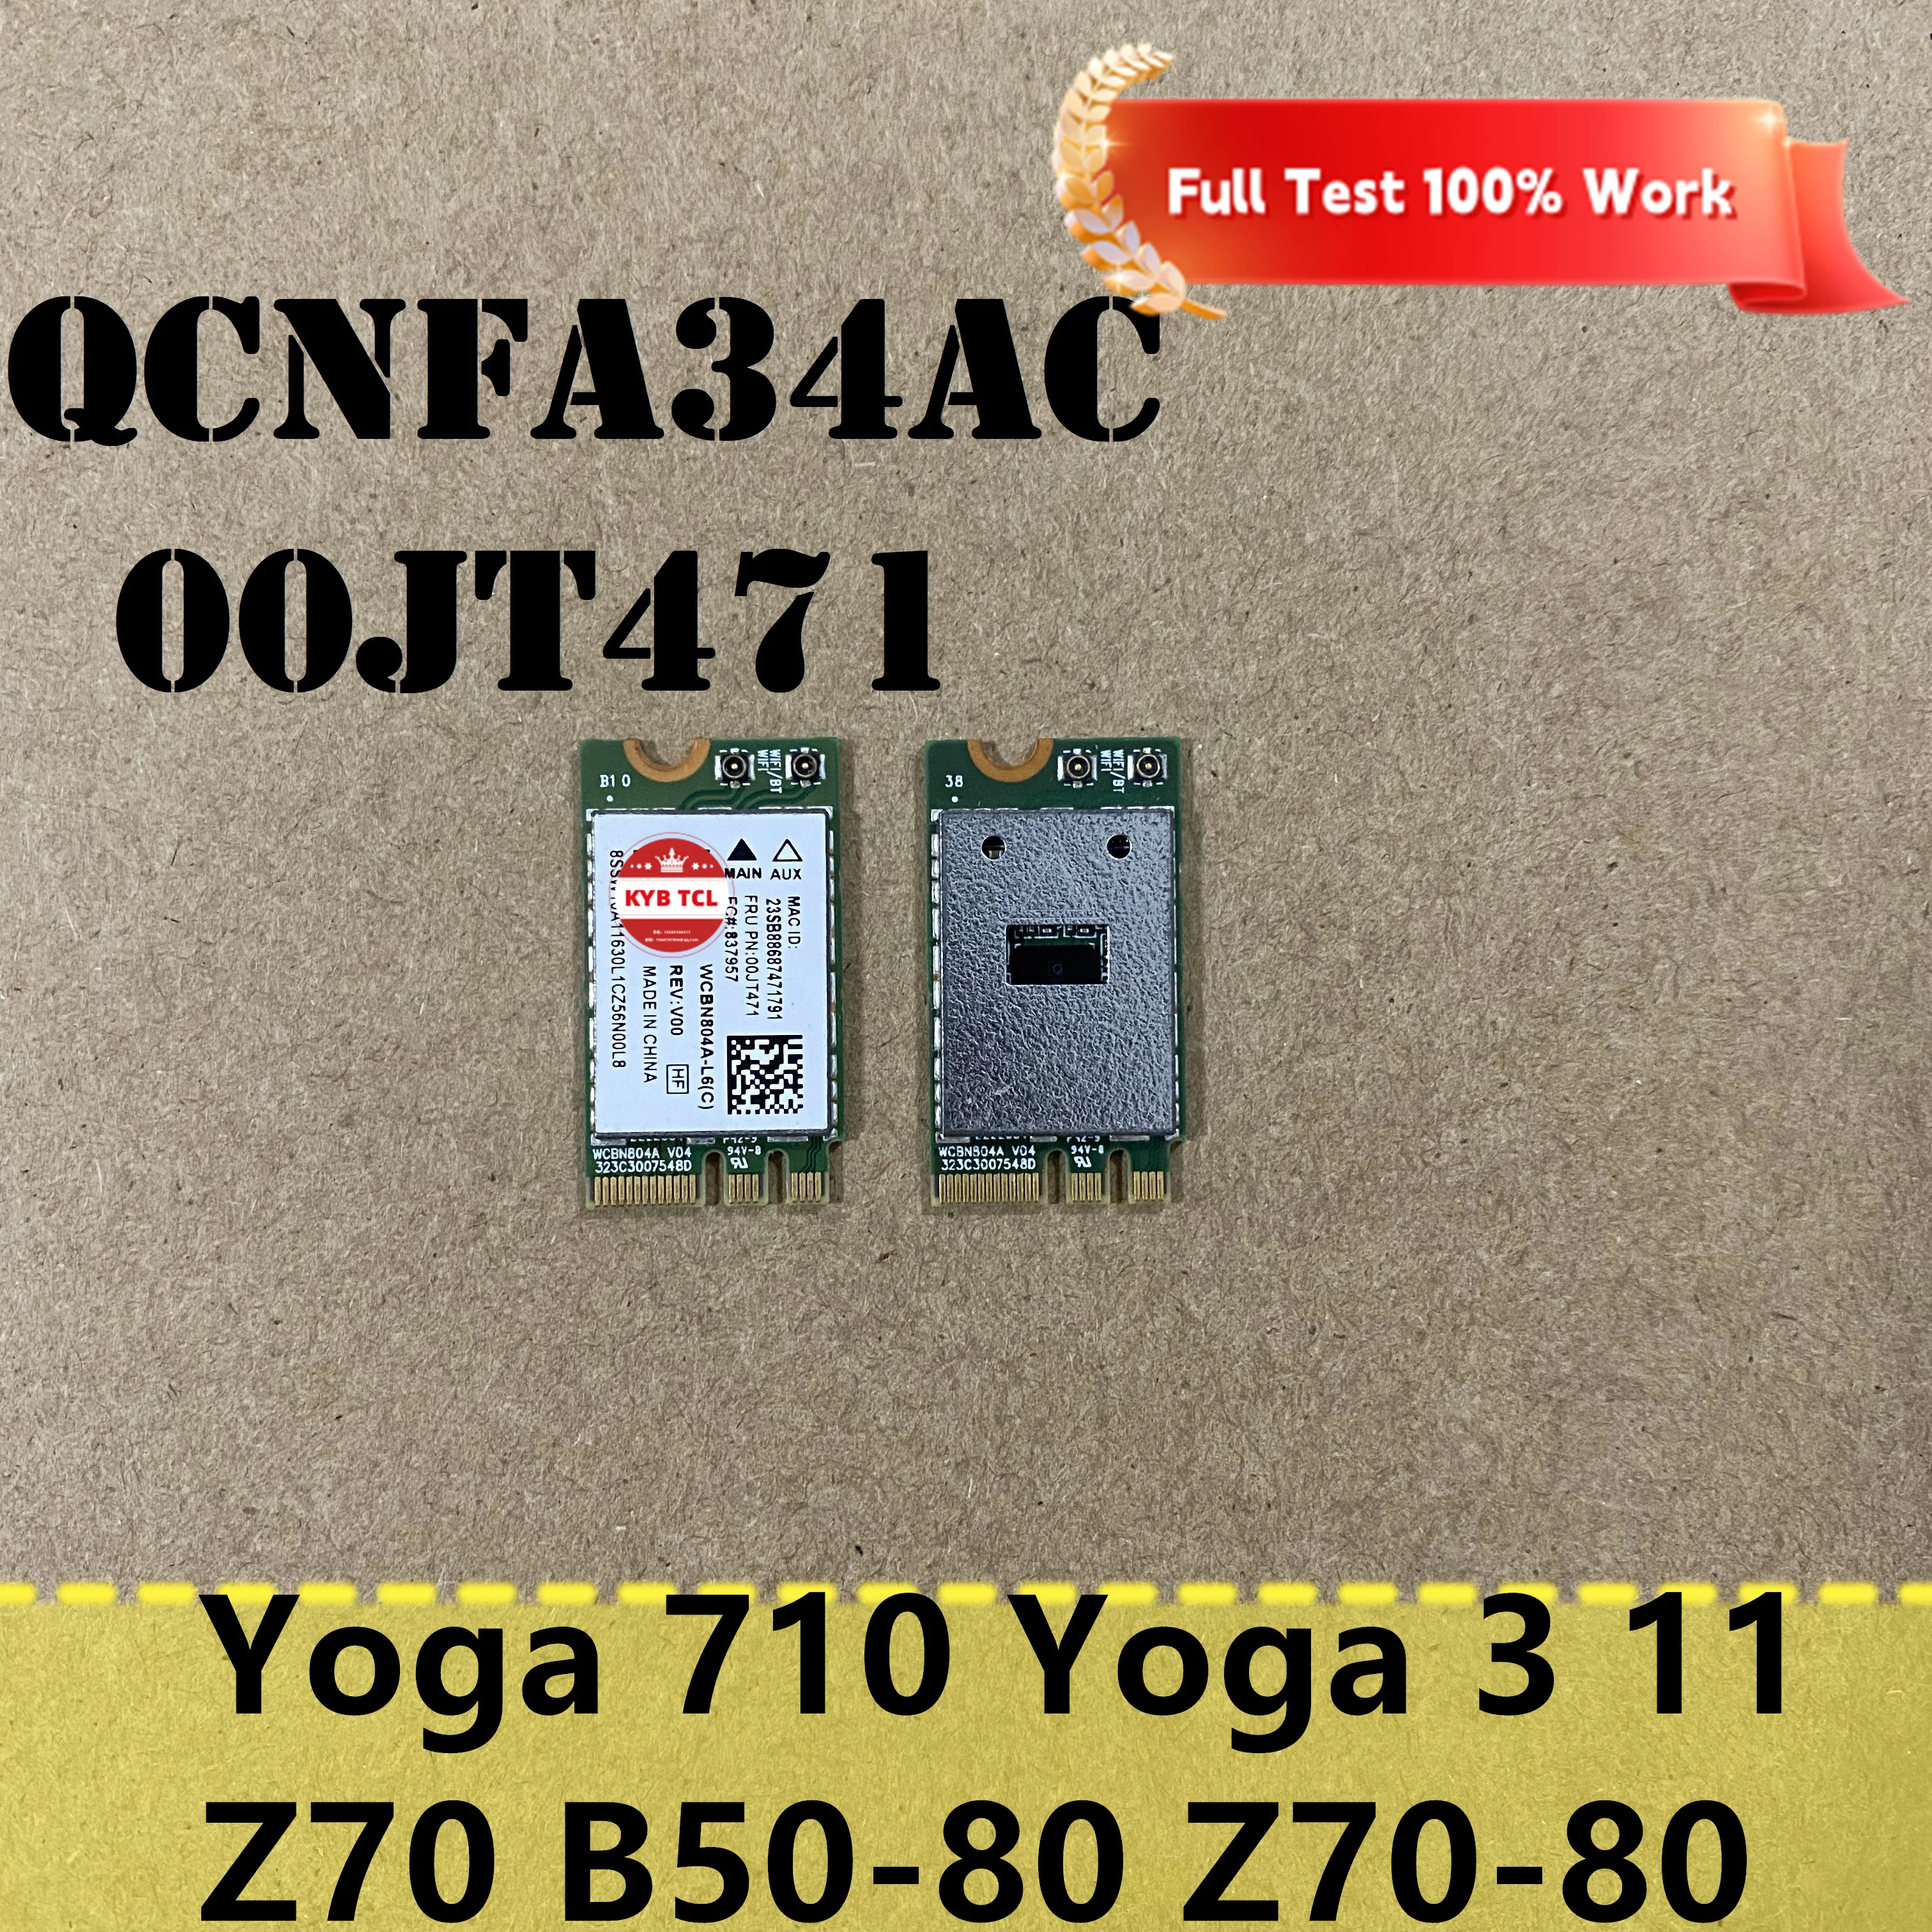 Ноутбук Оригинальная беспроводная карта WiFi QCNFA34AC 00JT471 для Lenovo Yoga 710 Z70 B50-80 Z70-80 Yoga 3 11